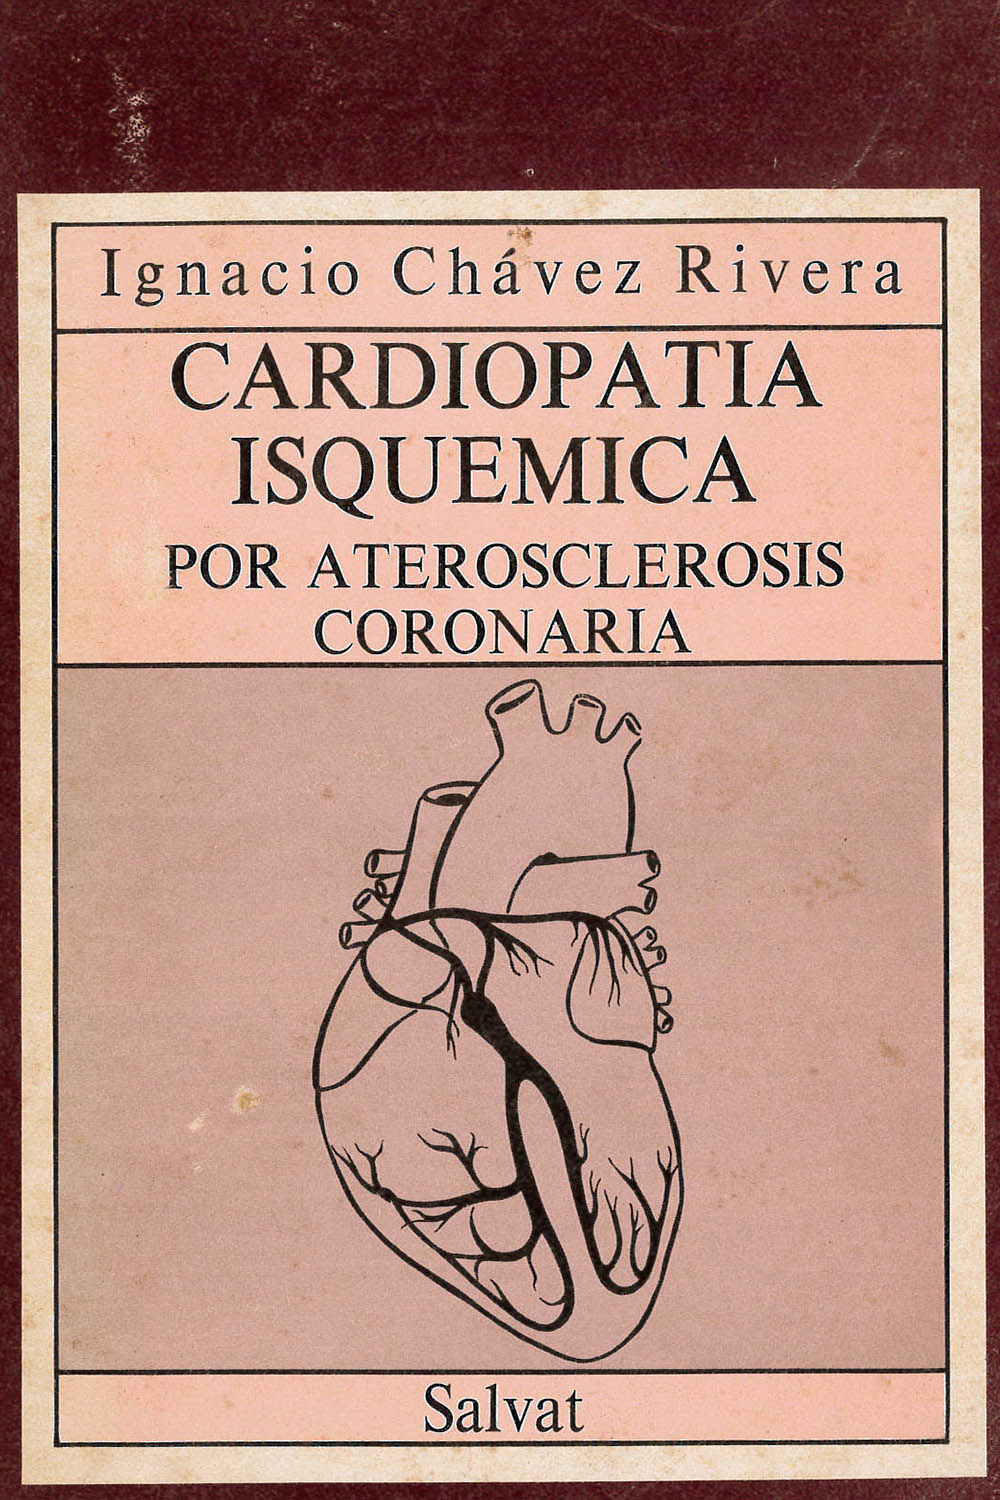 25 / 26 - RC675 C33 Cardiopatía Isquemica, Ignacio Chávez Rivera - Salvat, México 1979